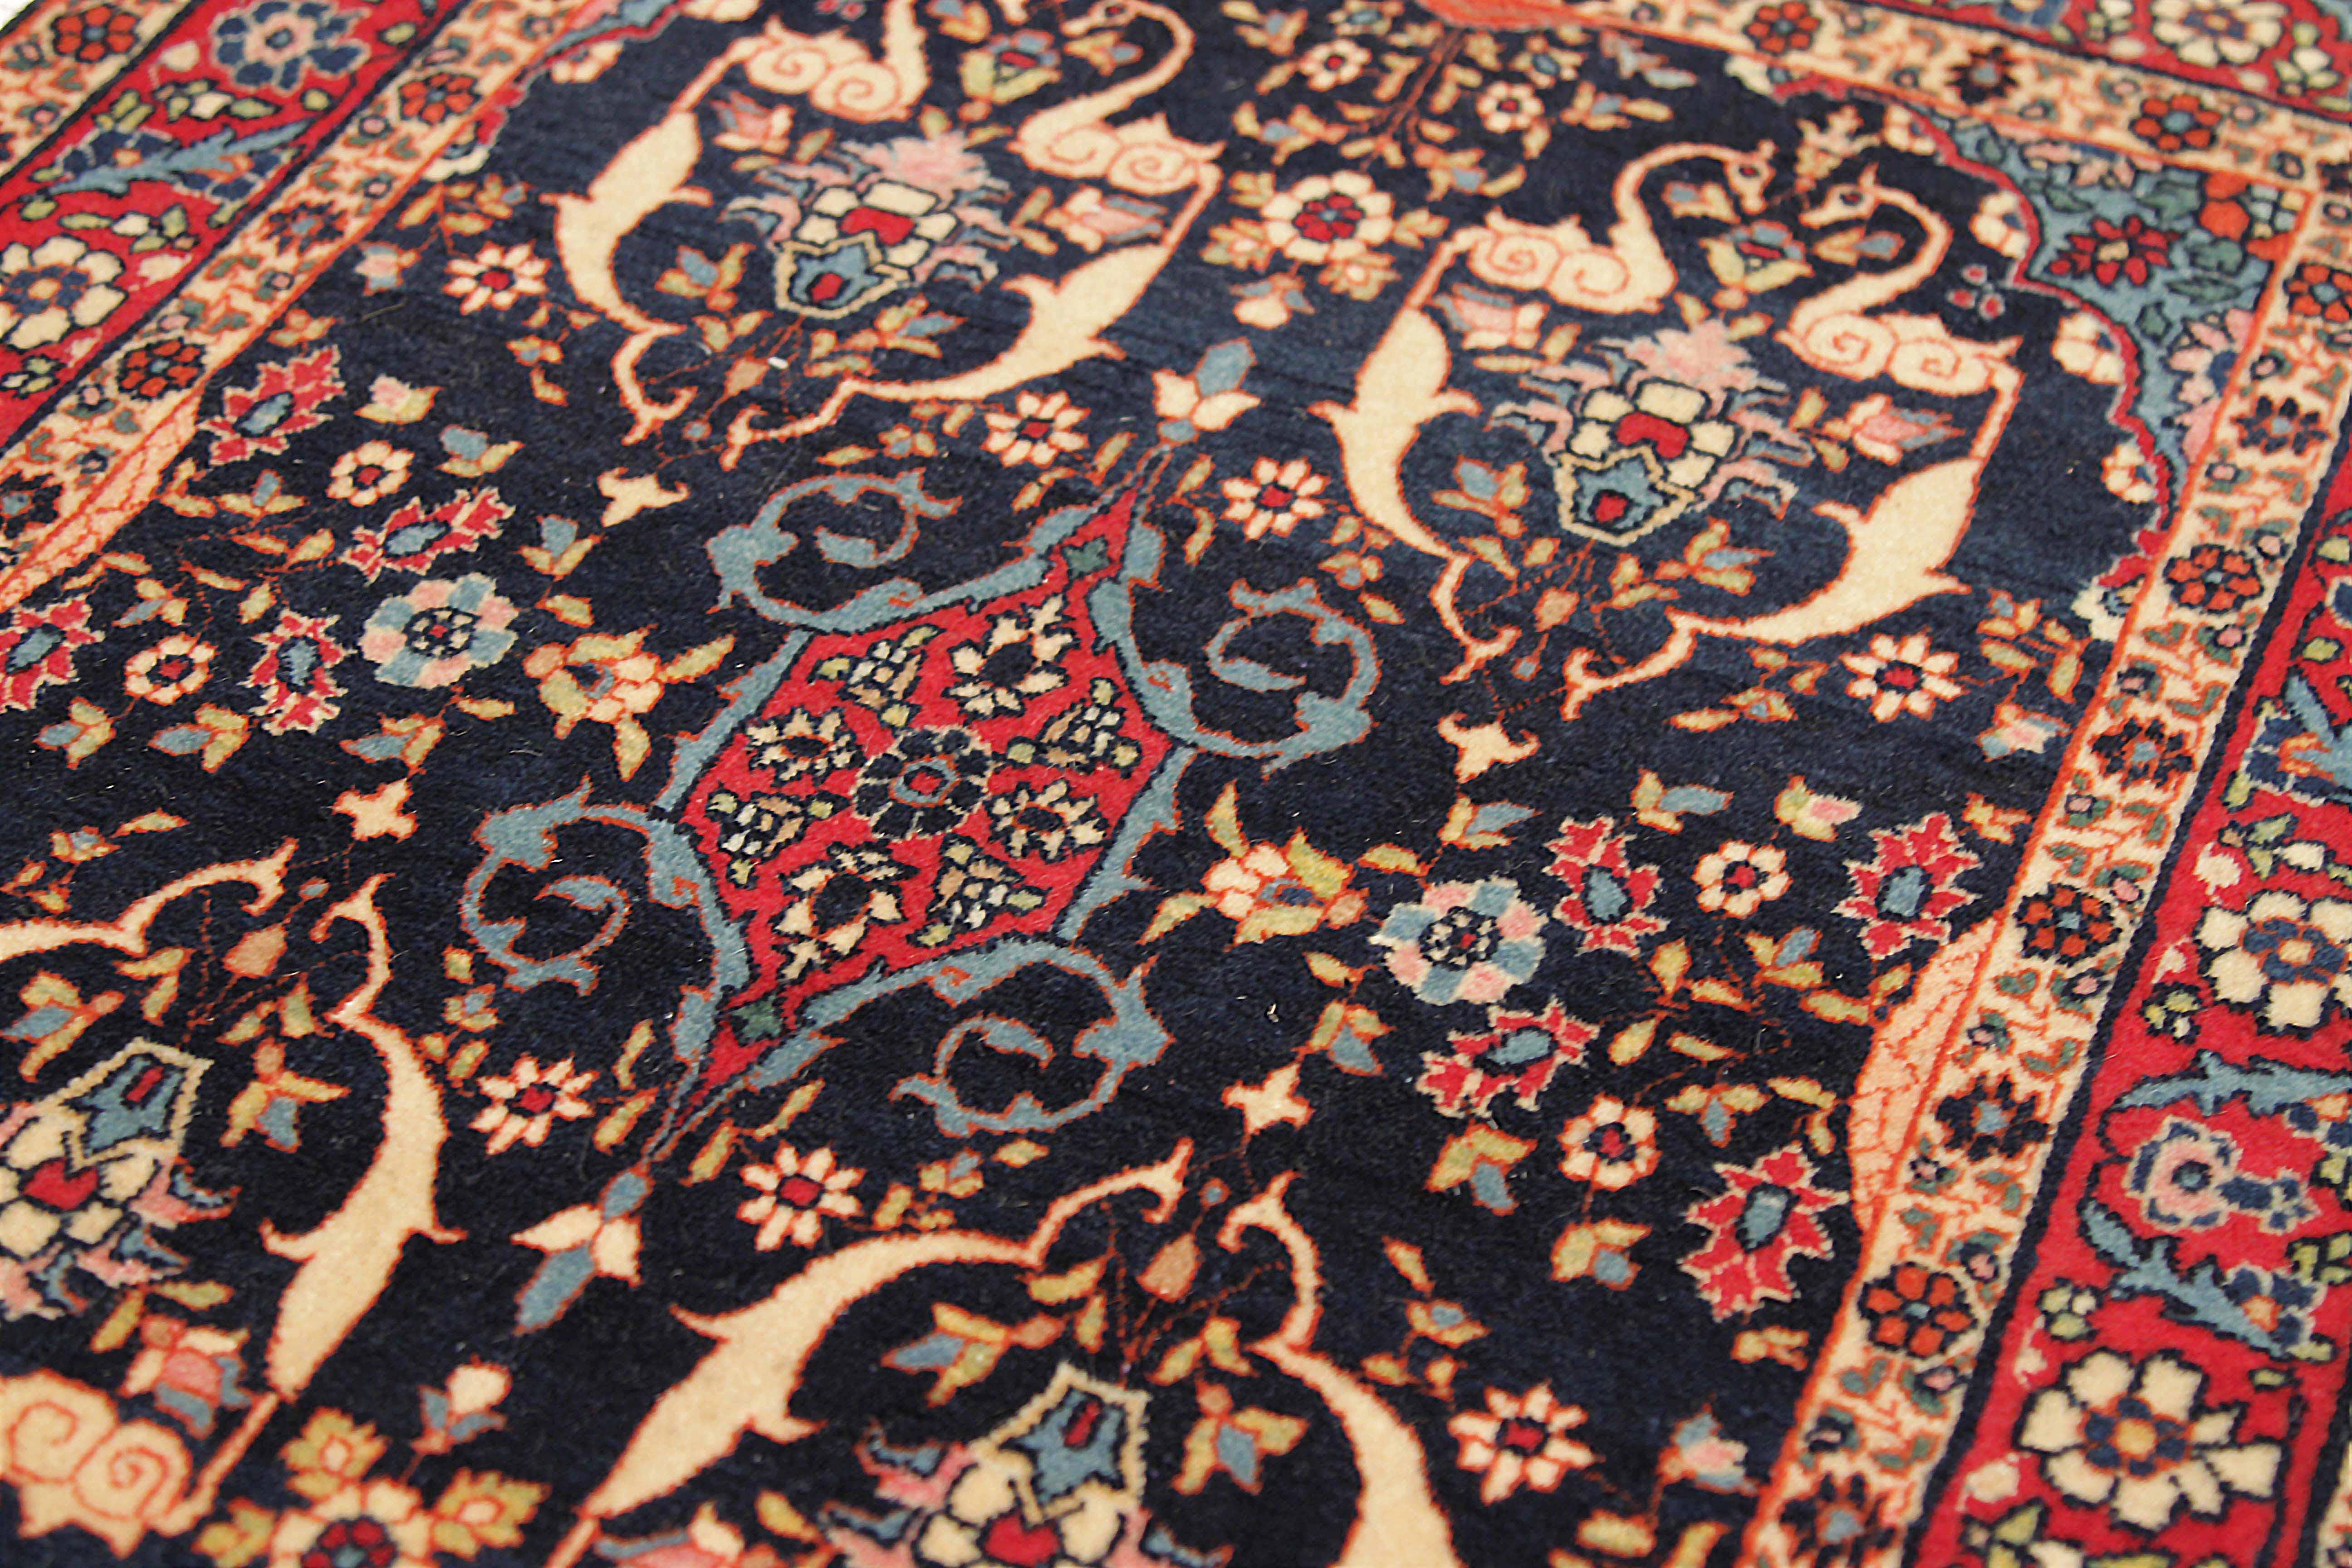 Hand-Woven Antique Persian Area Rug Tehran Design For Sale